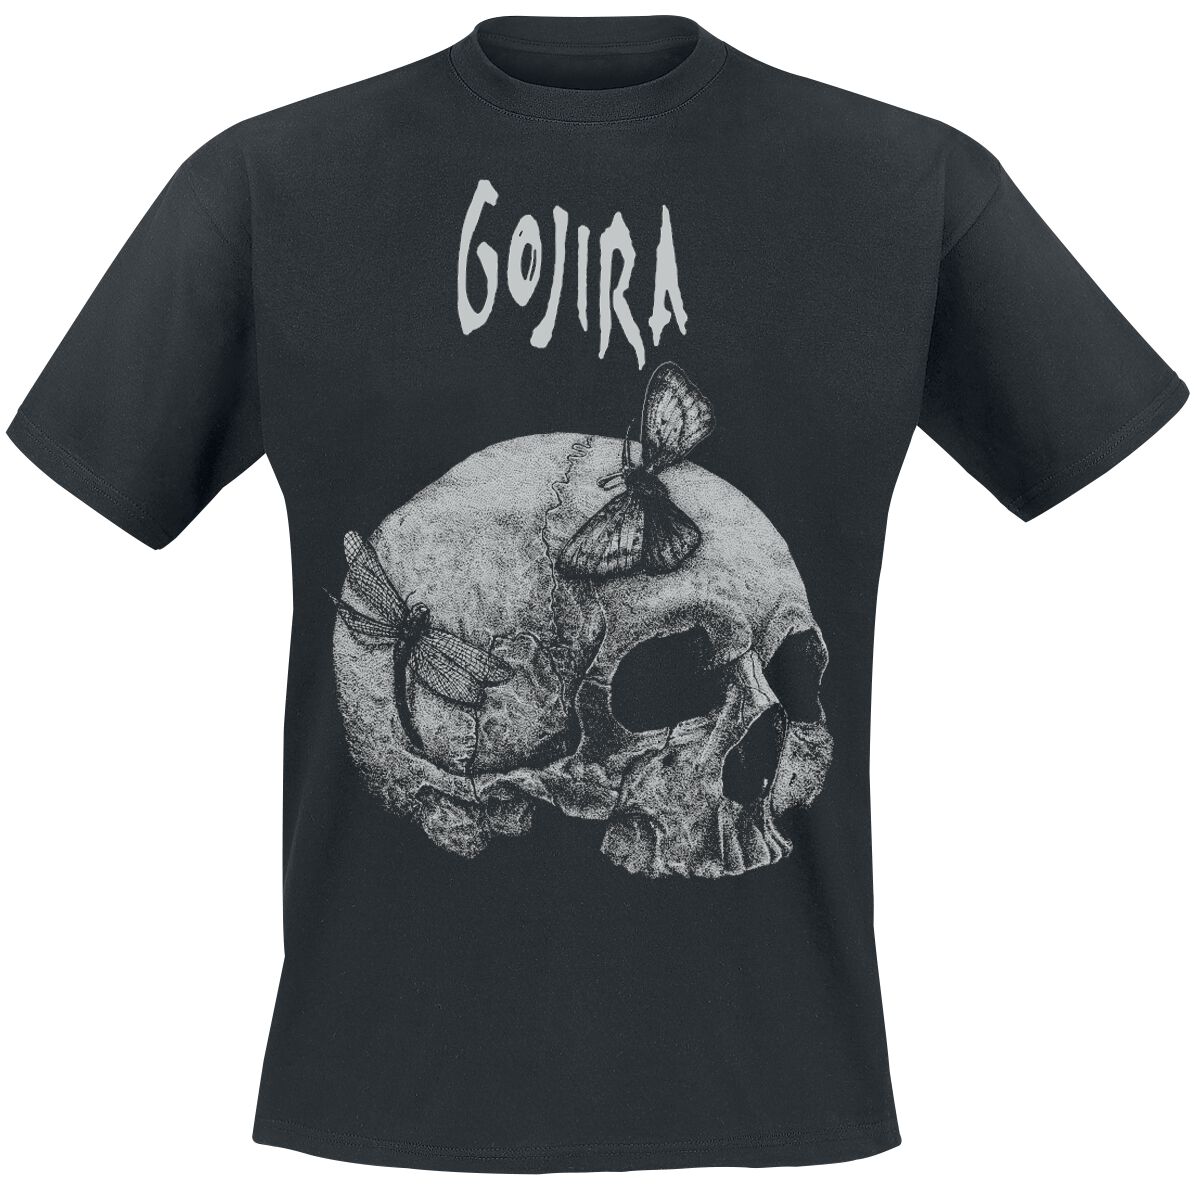 Image of T-Shirt di Gojira - Moth Skull - S a XXL - Uomo - nero